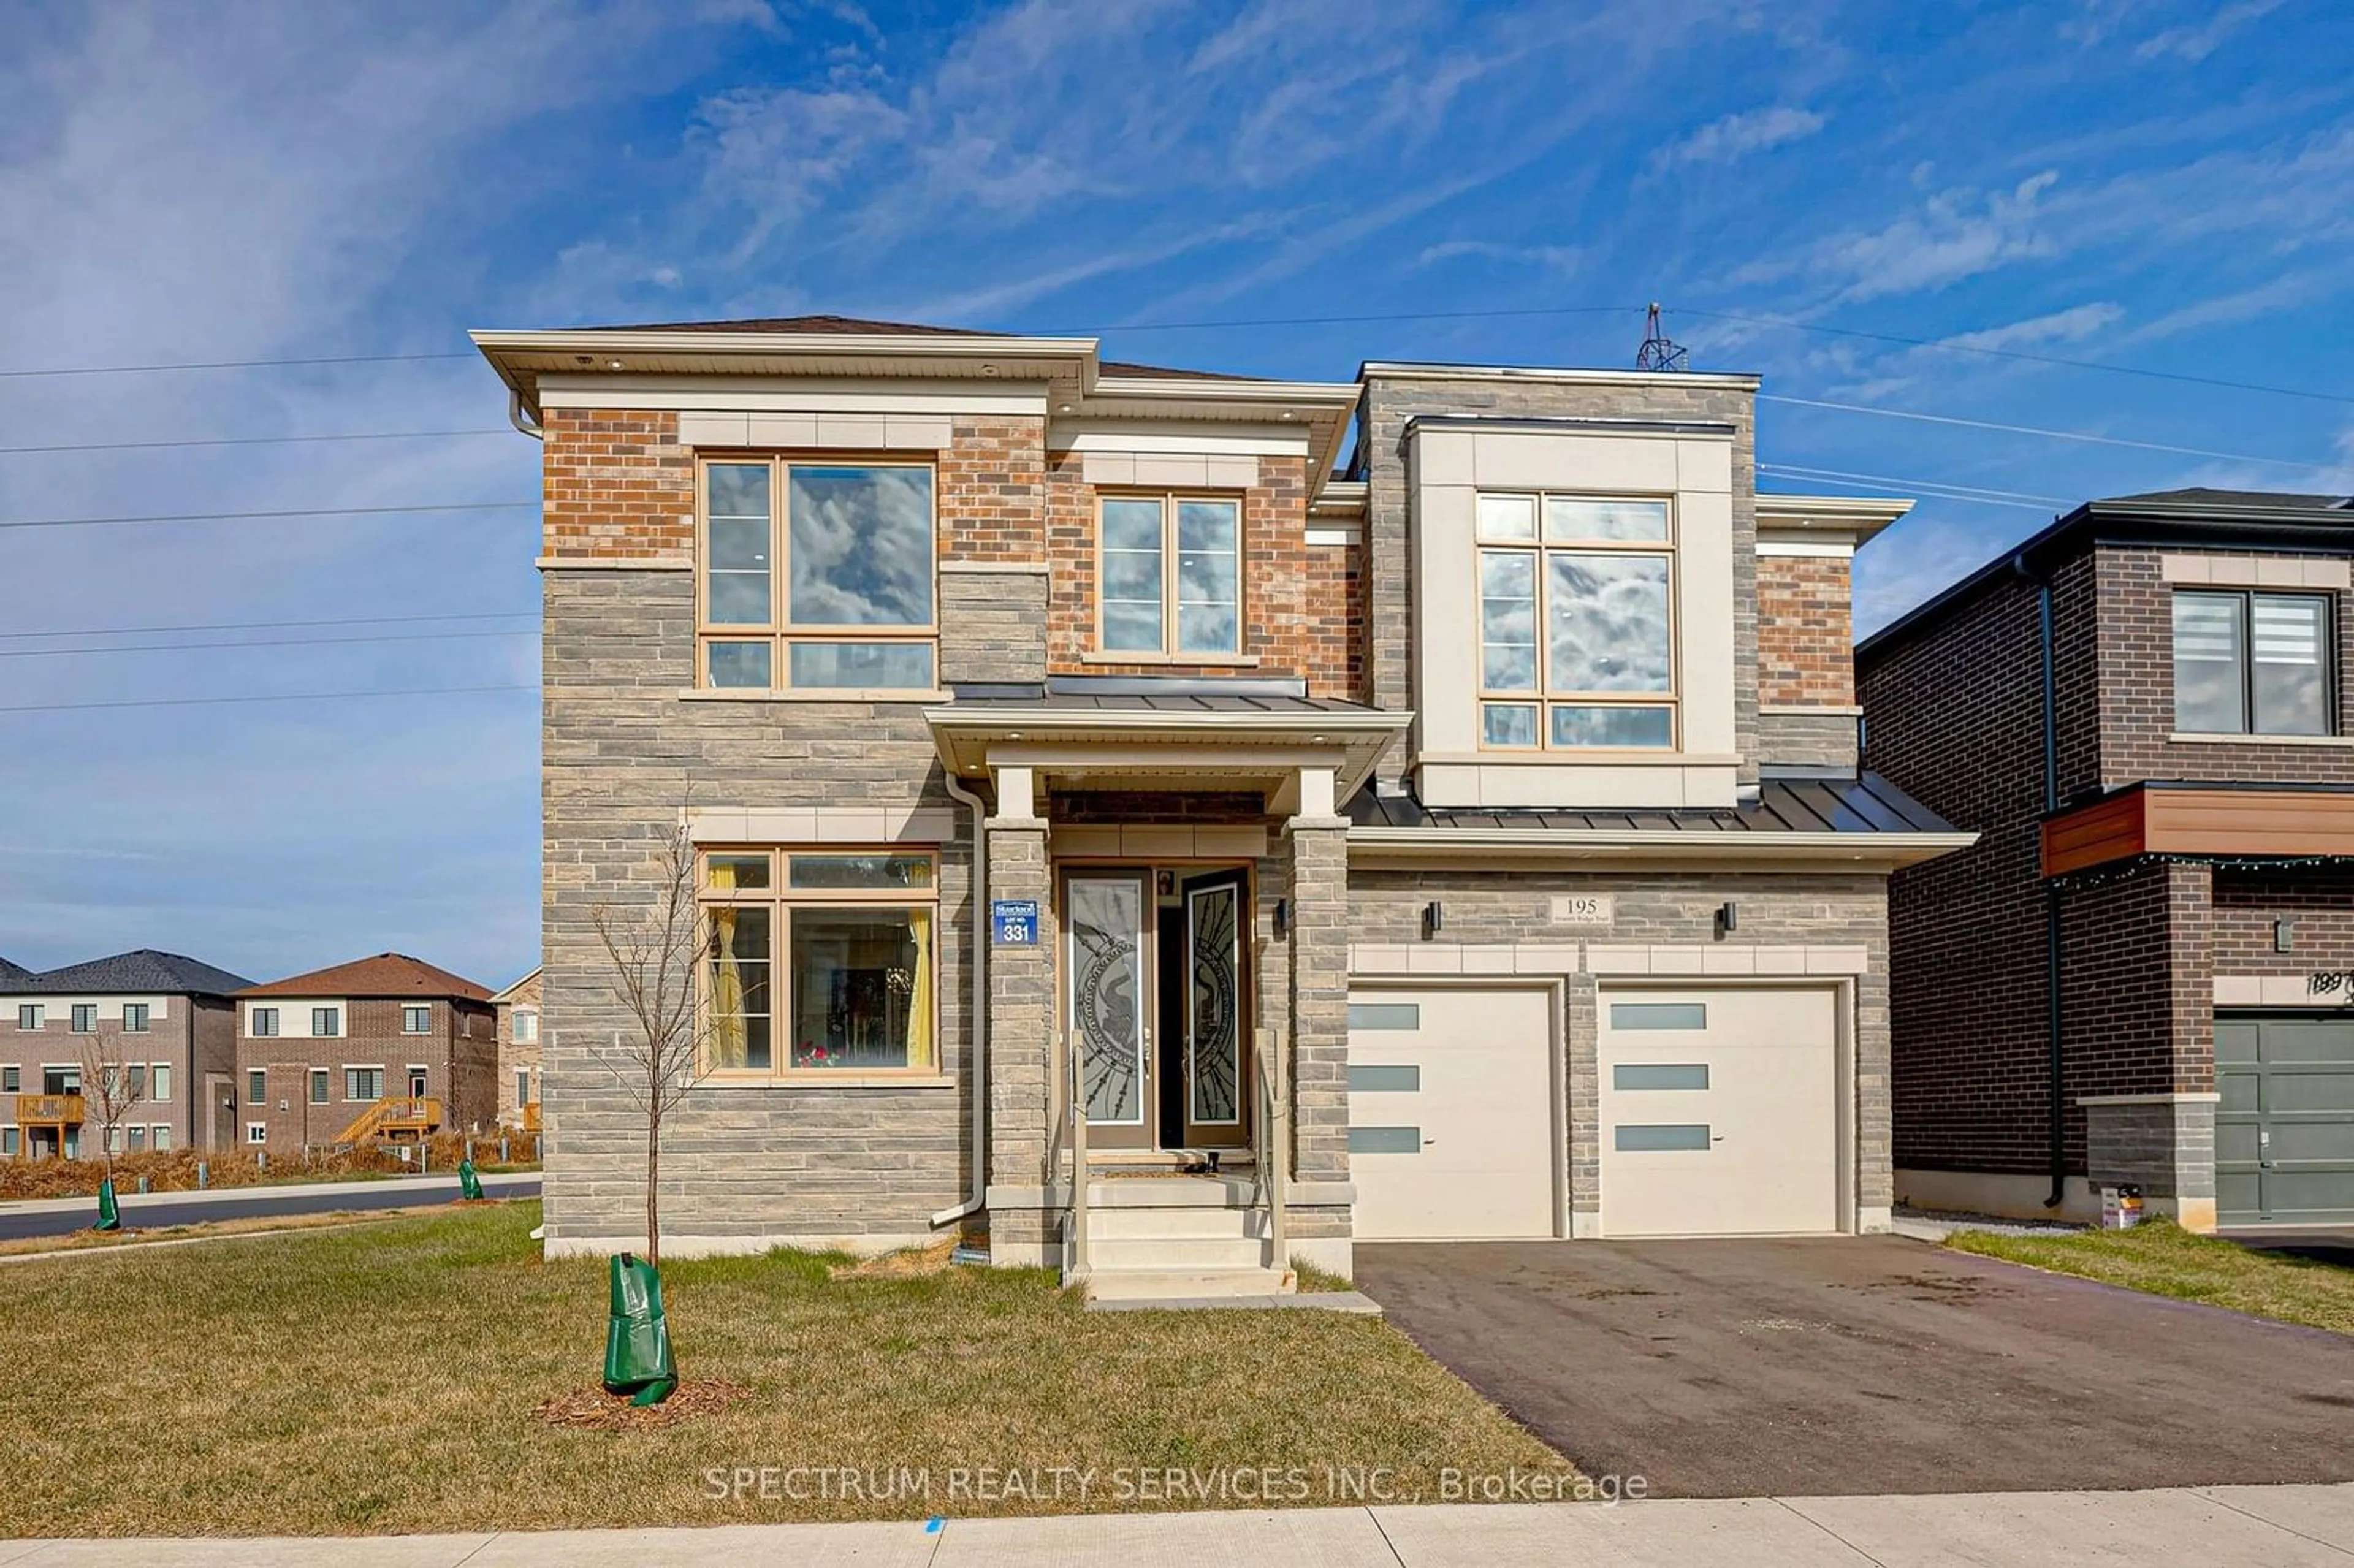 Home with brick exterior material for 195 Granite Ridge Tr, Hamilton Ontario L0R 2H7